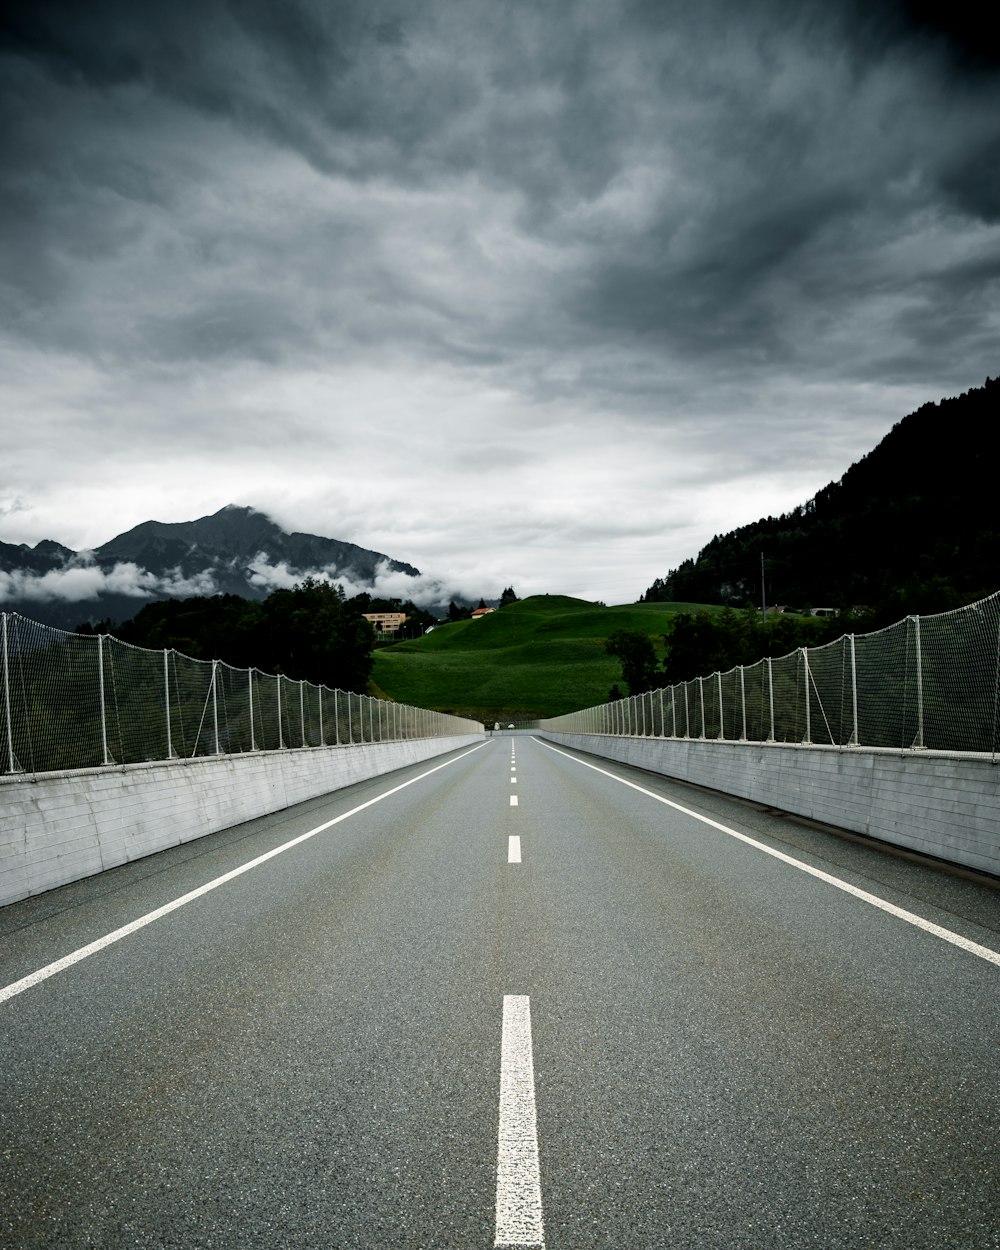 gray concrete road under gray sky